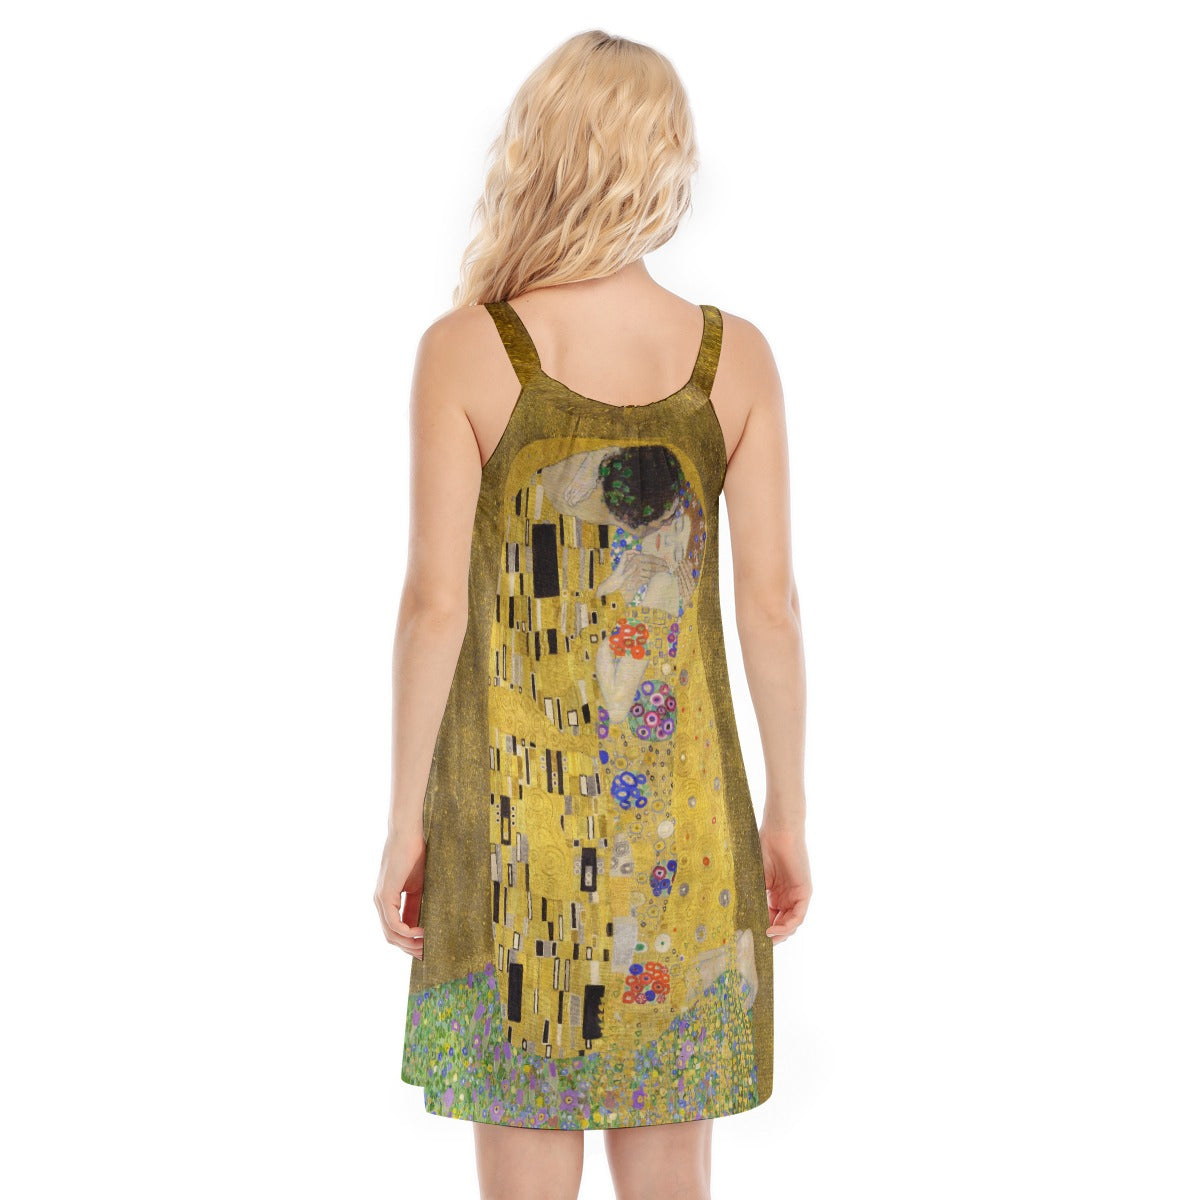 Ethereal Dress with Klimt's Golden Hues